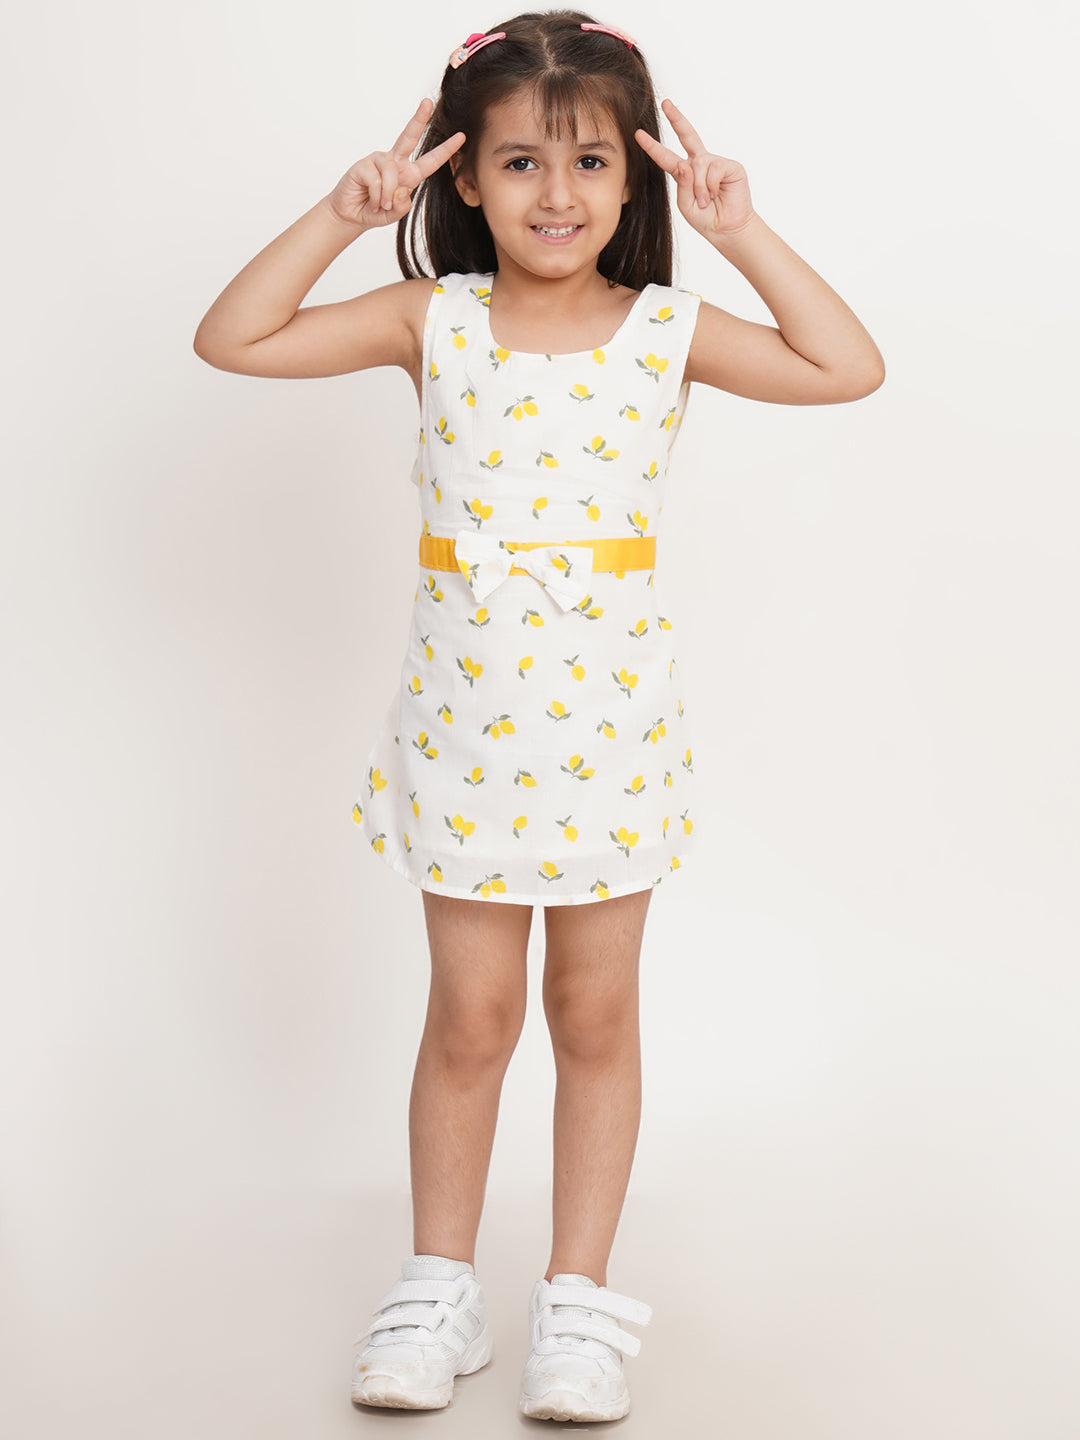 CREATIVE KID'S Girl White & Yellow Fruit Print Cotton A-Line Dress